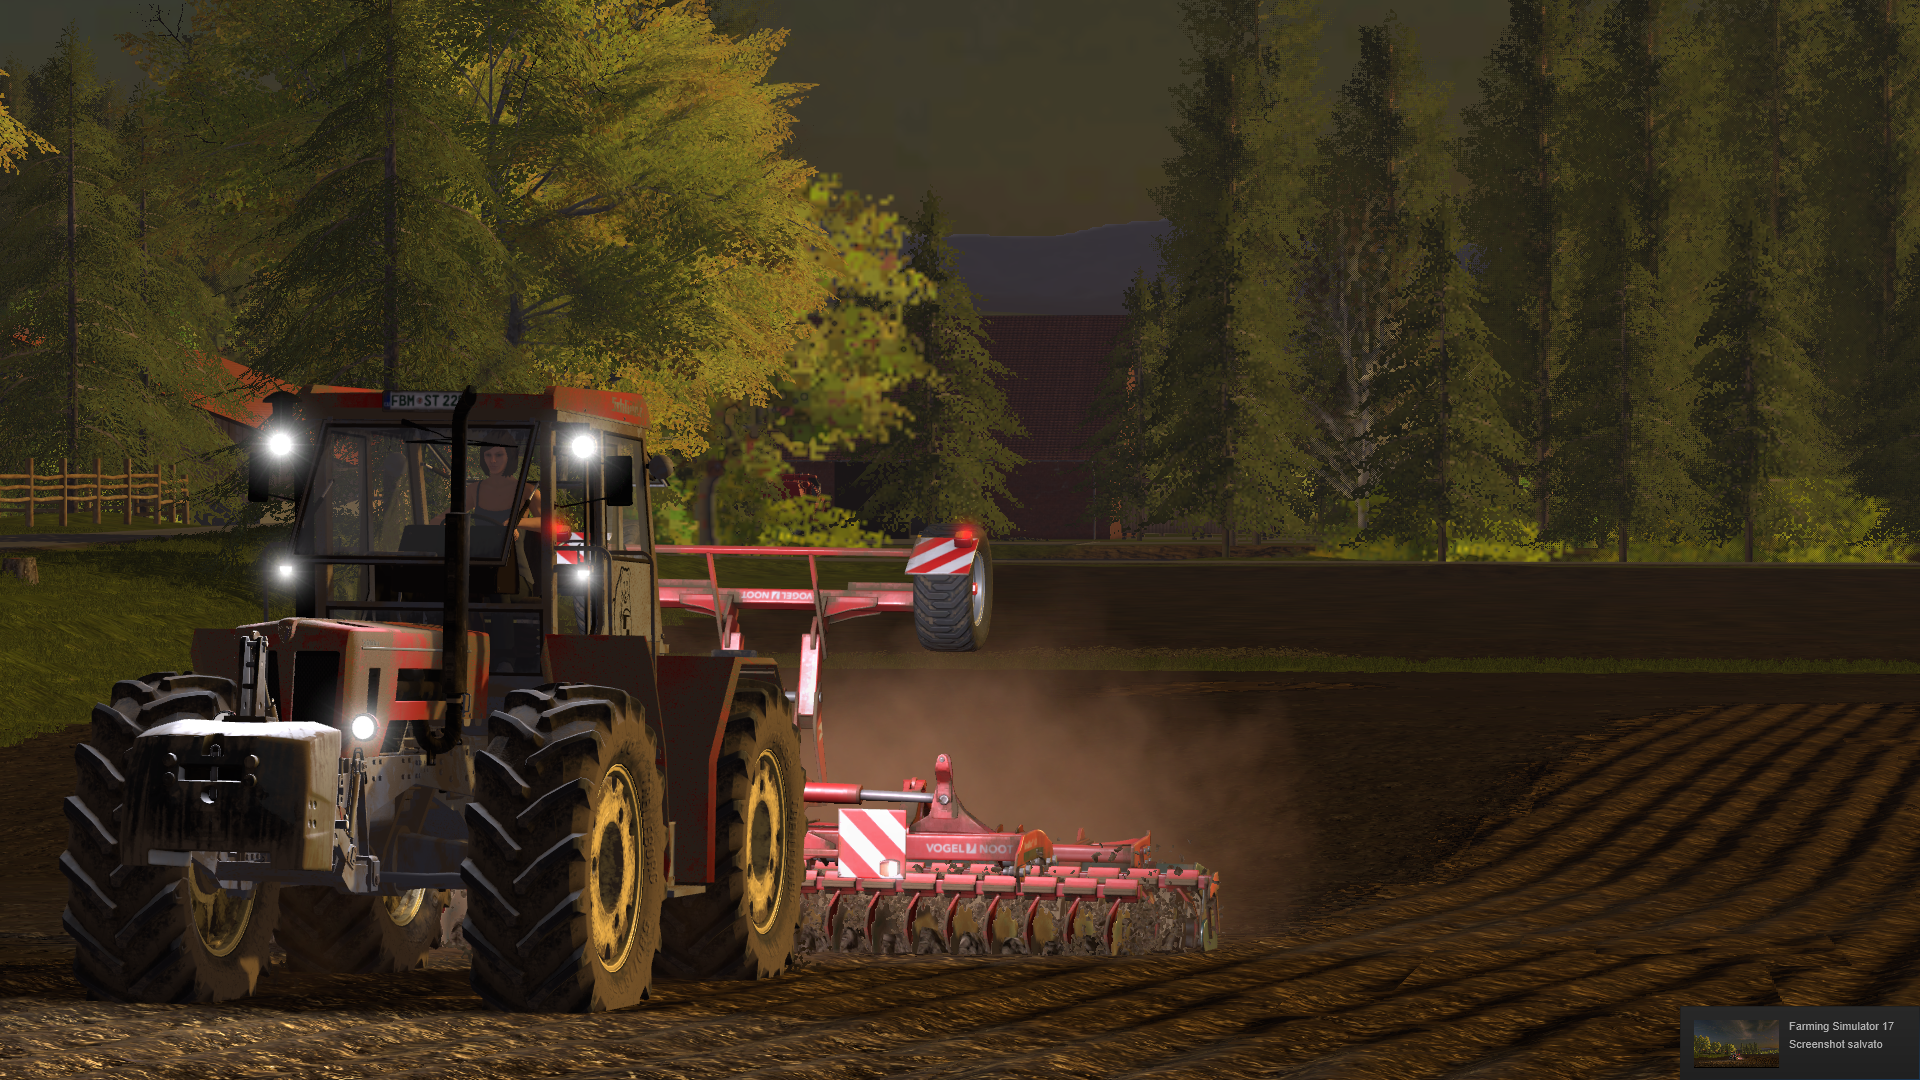 farming simulator 17 steam